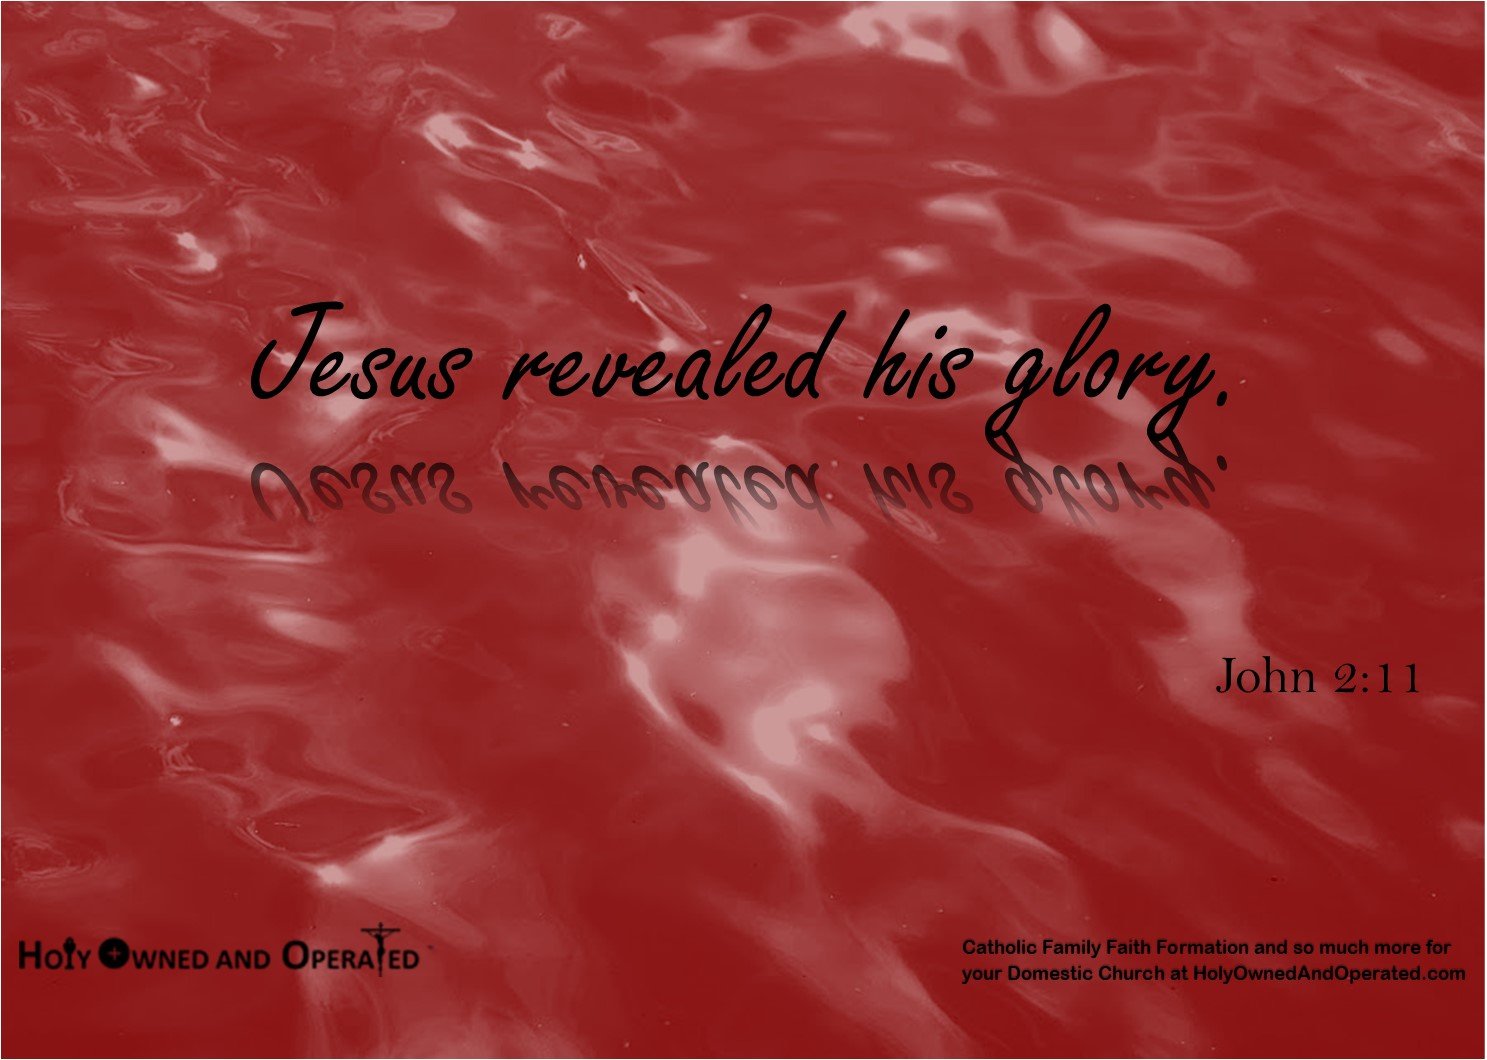 Wine colored liquid with "Jesus revealed his glory" (John 2:11) written across it.